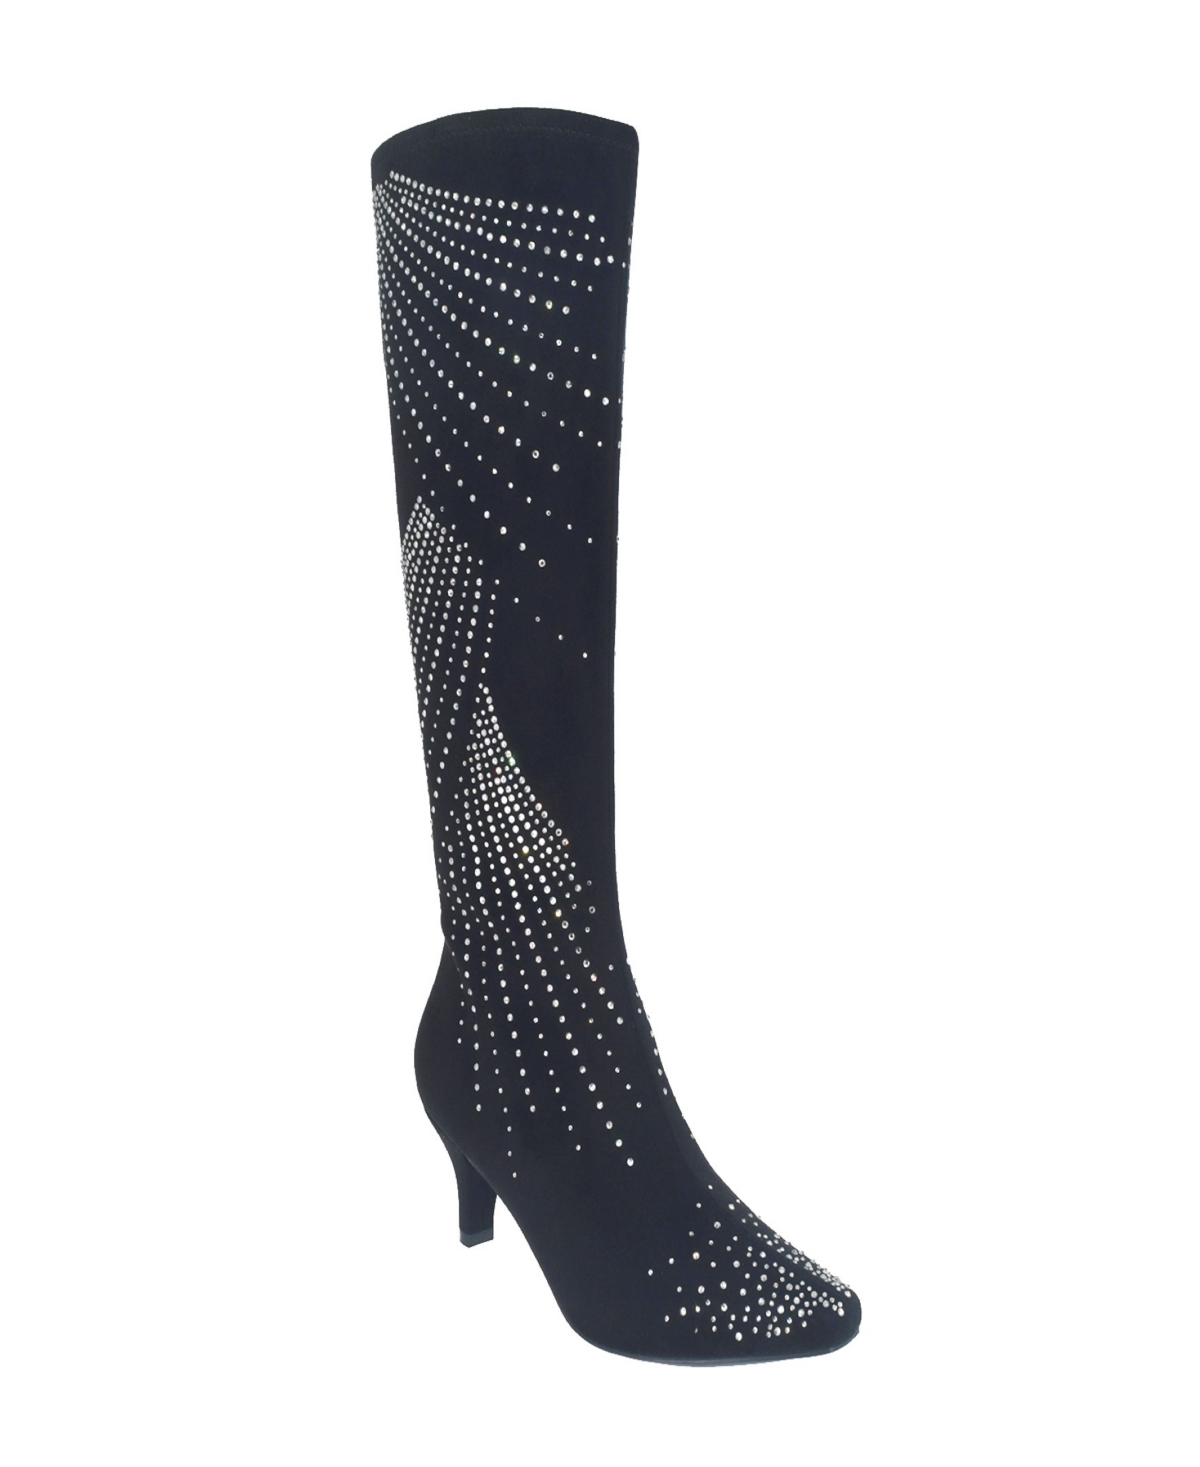 Women's Namora Sparkle Stretch Knee High Boots - Black